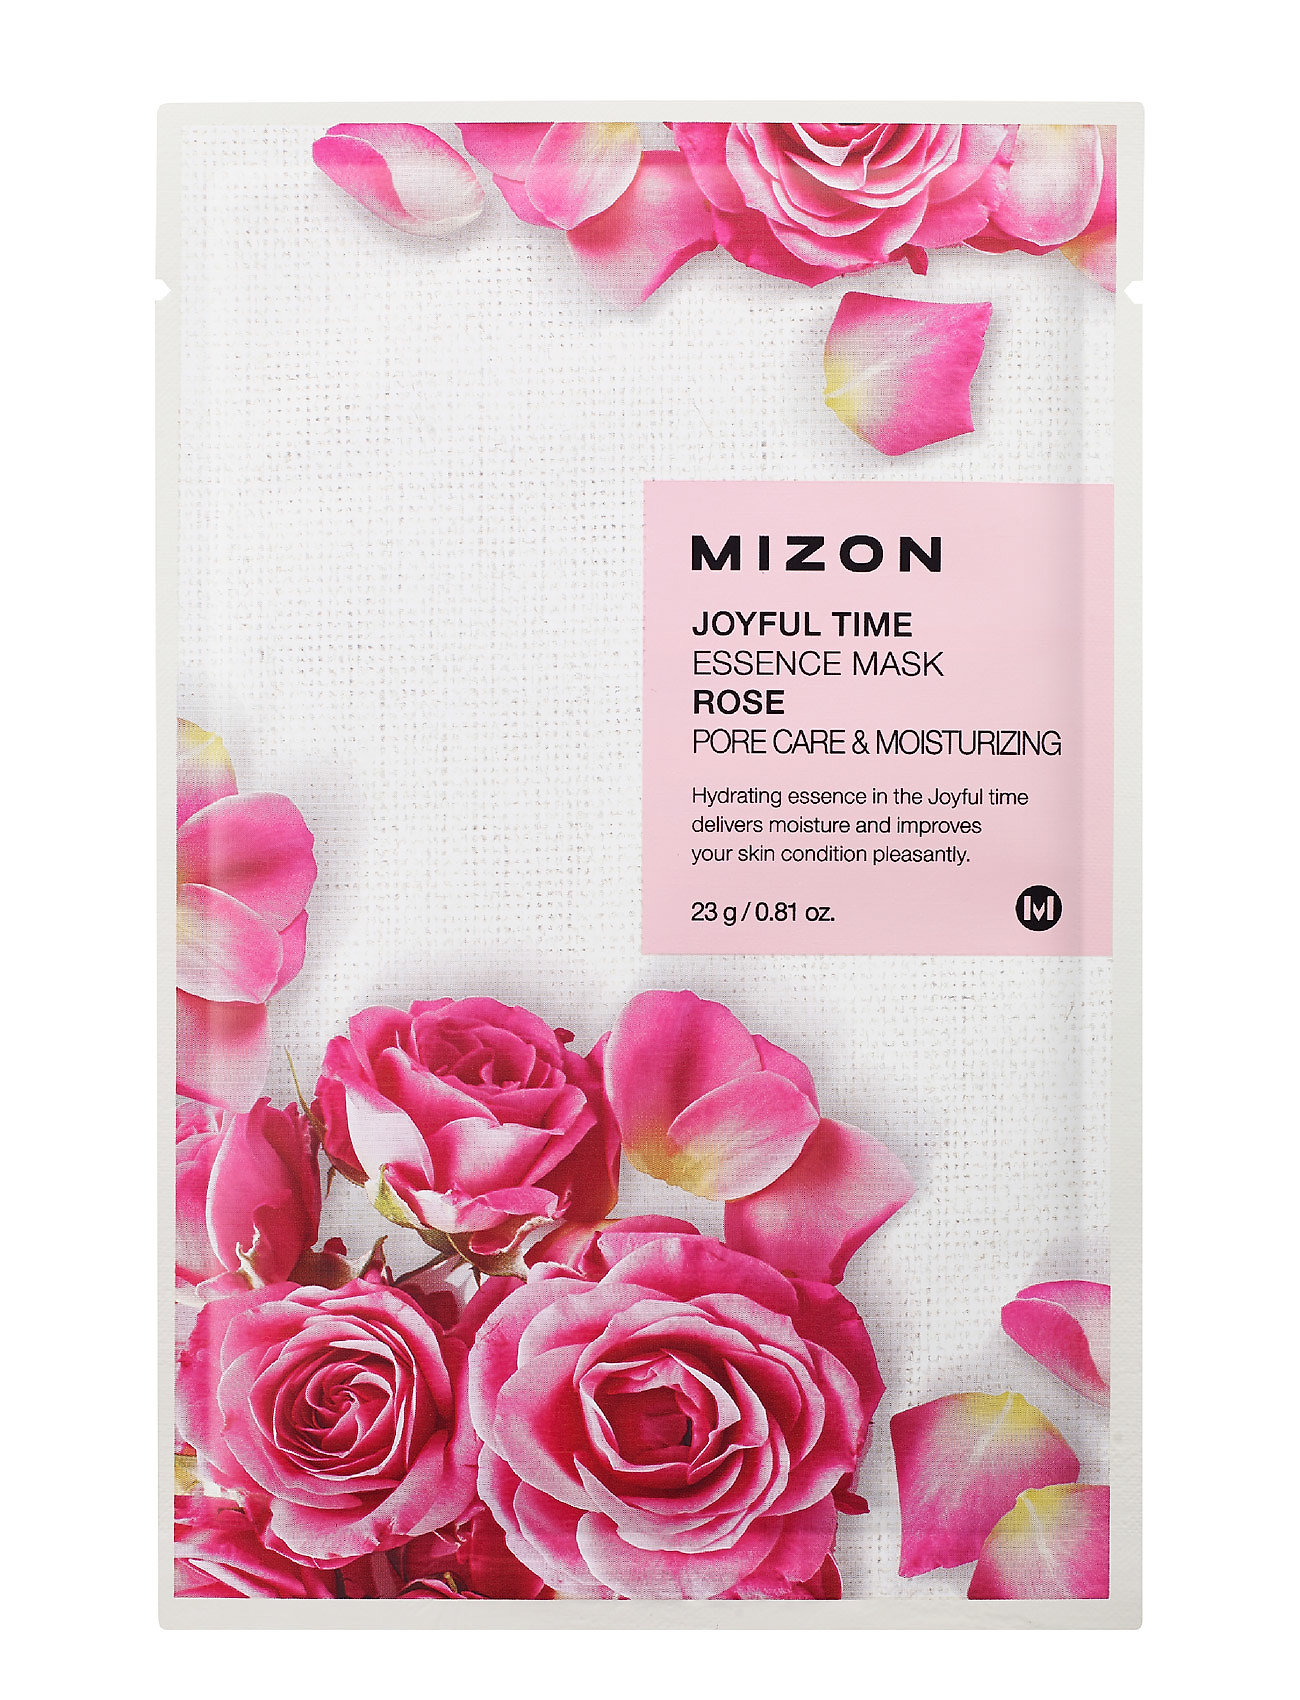 Joyful Time Mask Rose Beauty WOMEN Skin Care Face Sheet Mask Nude MIZON